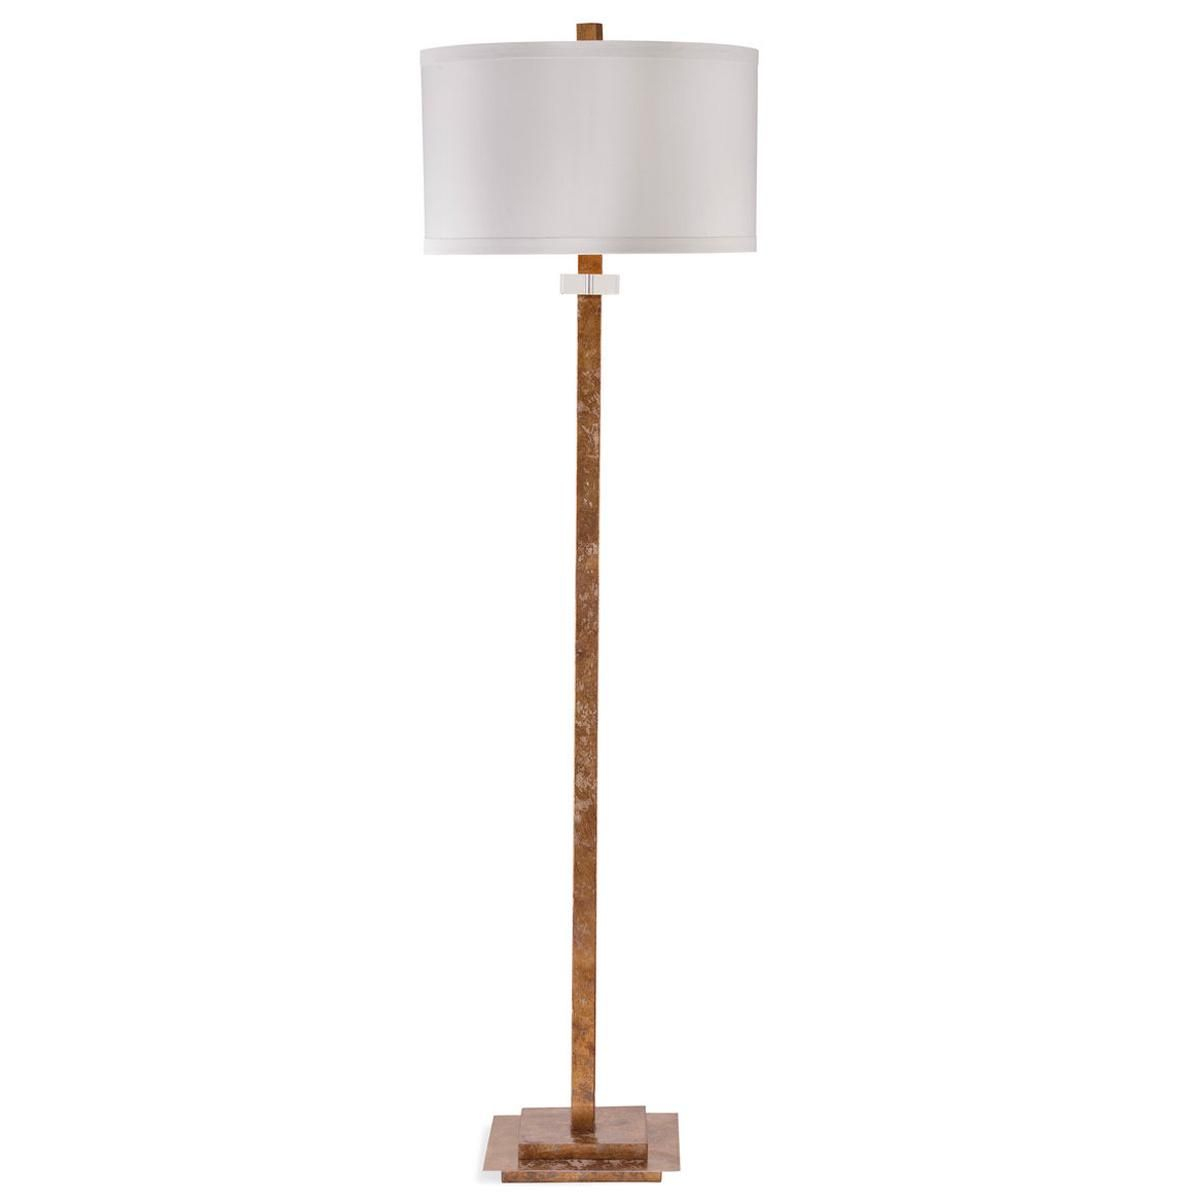 Glamorous Gold Leaf Floor Lamp For The Home Floor Lamp regarding measurements 1200 X 1200